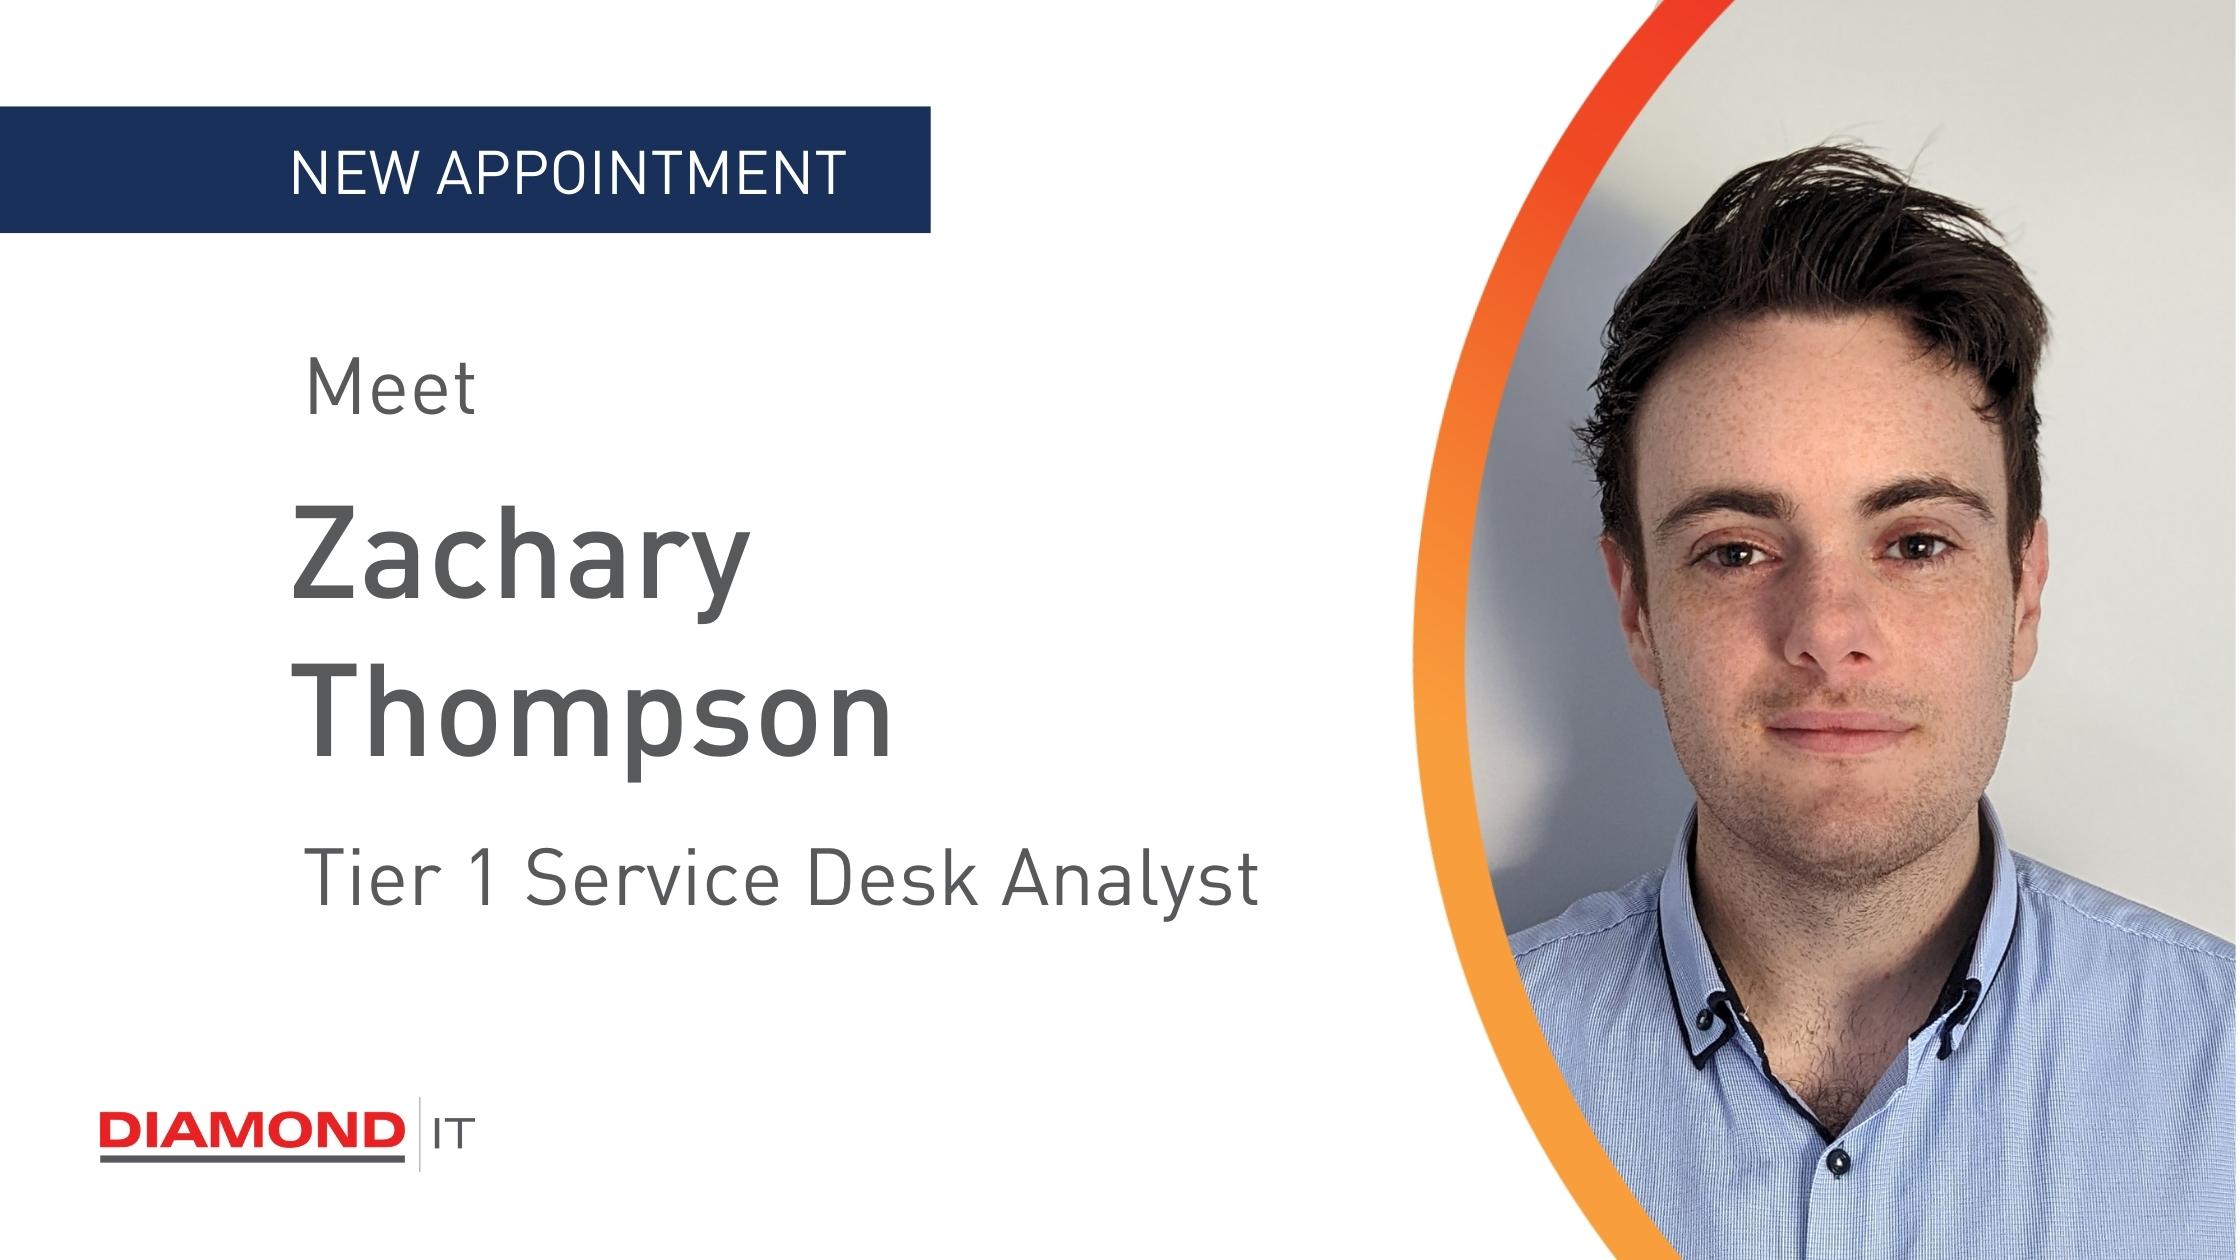 Meet our Tier 1 Service Desk Analyst - Zachary Thompson